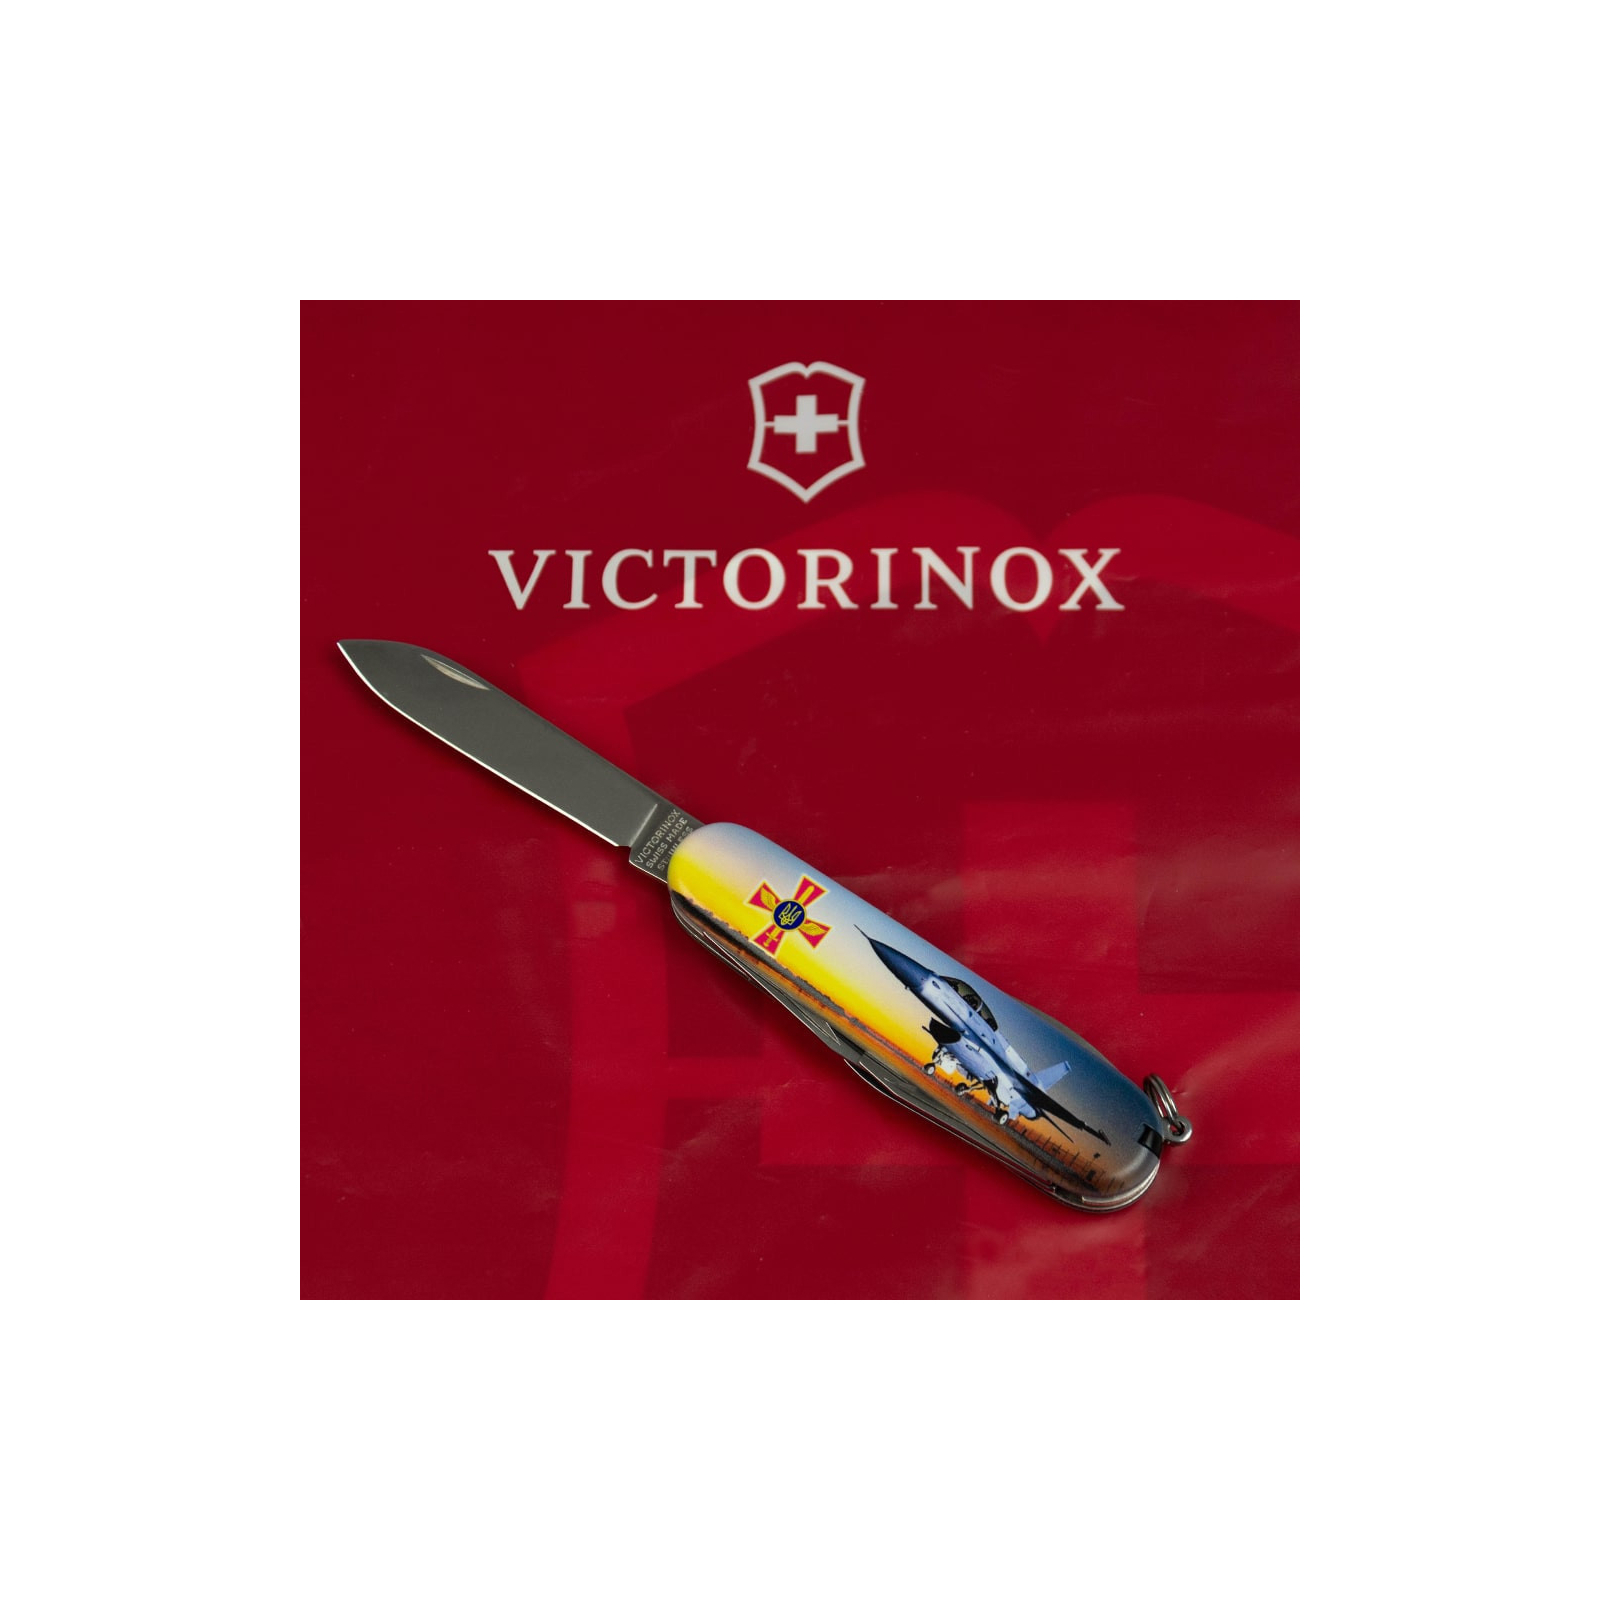 Нож Victorinox Spartan Army 91 мм Літак + Емблема ПС ЗСУ (1.3603.3_W3040p) изображение 5